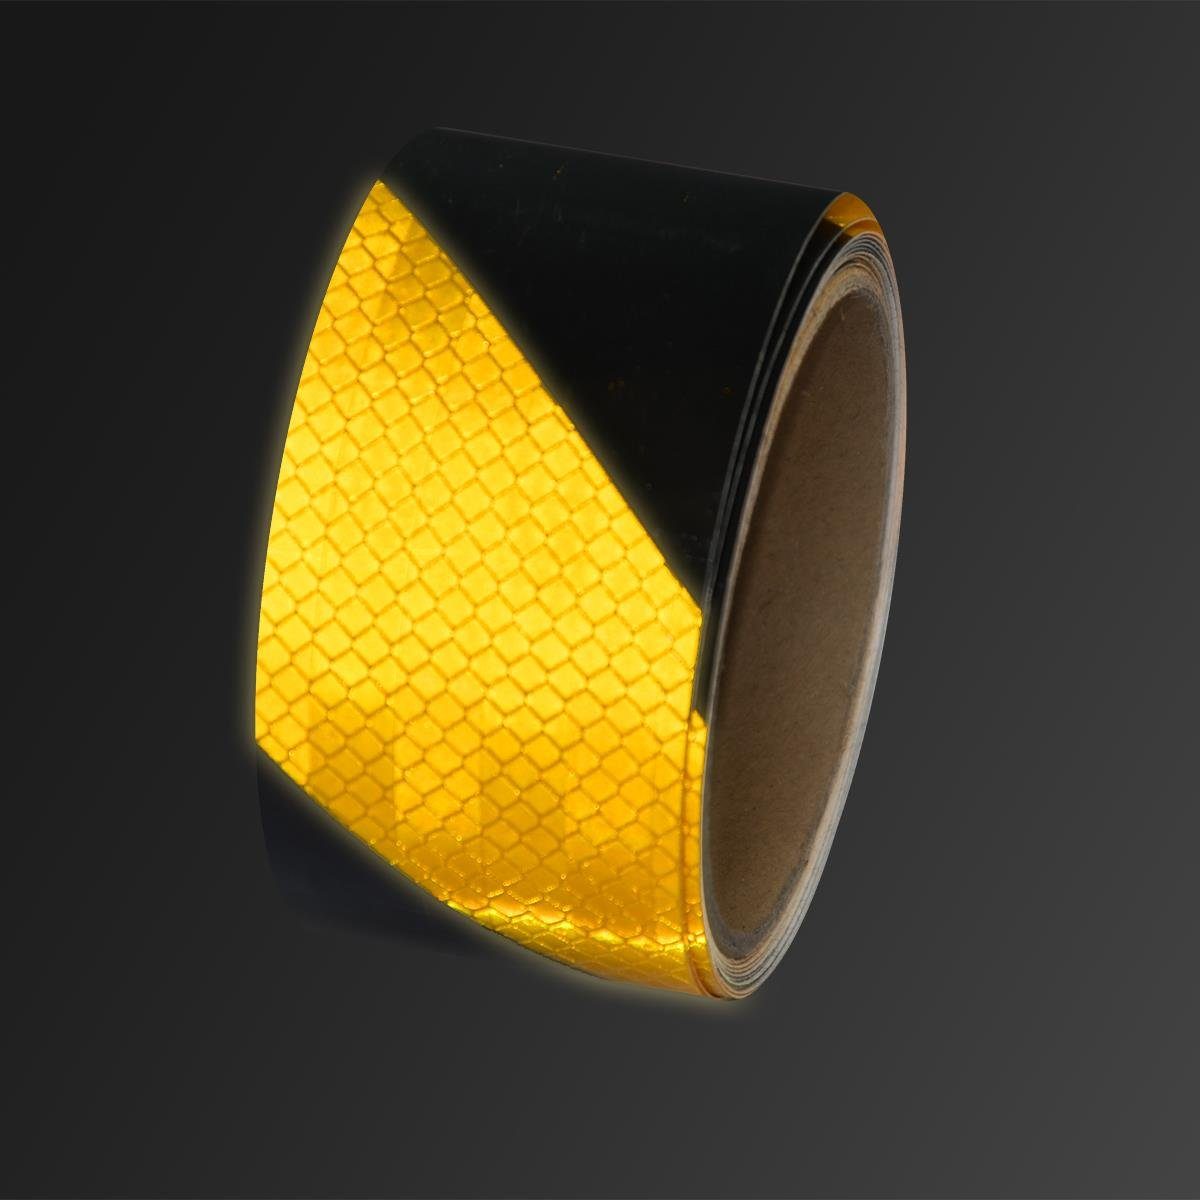 Klebeband Signalband Reflektorband 5cmx3m eyepower Reflektierendes Schwarz-Gelb Warnklebeband